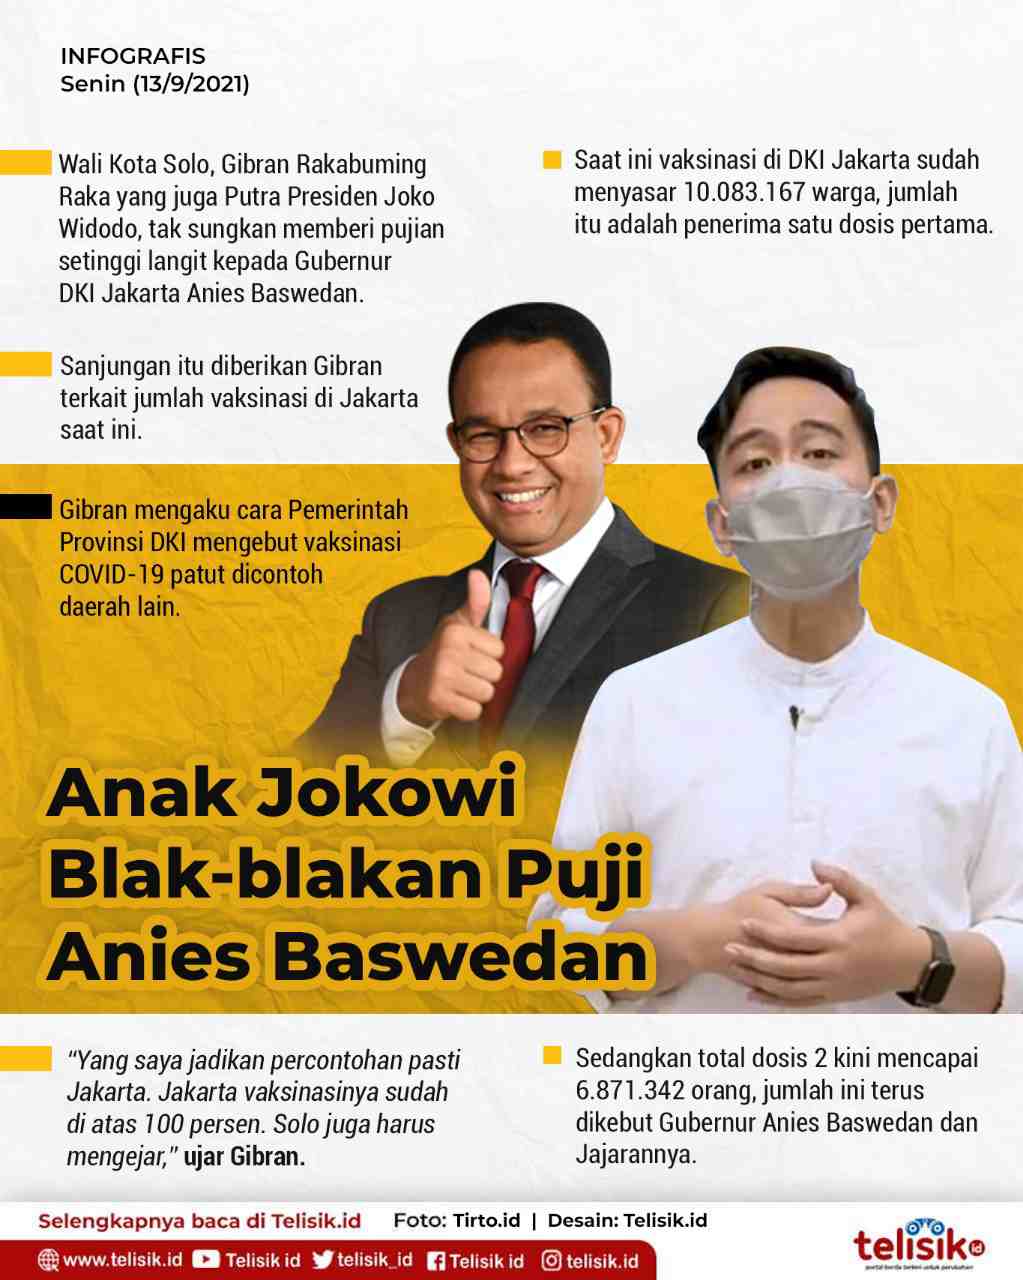 Infografis: Anak Jokowi Blak-blakan Puji Anies Baswedan